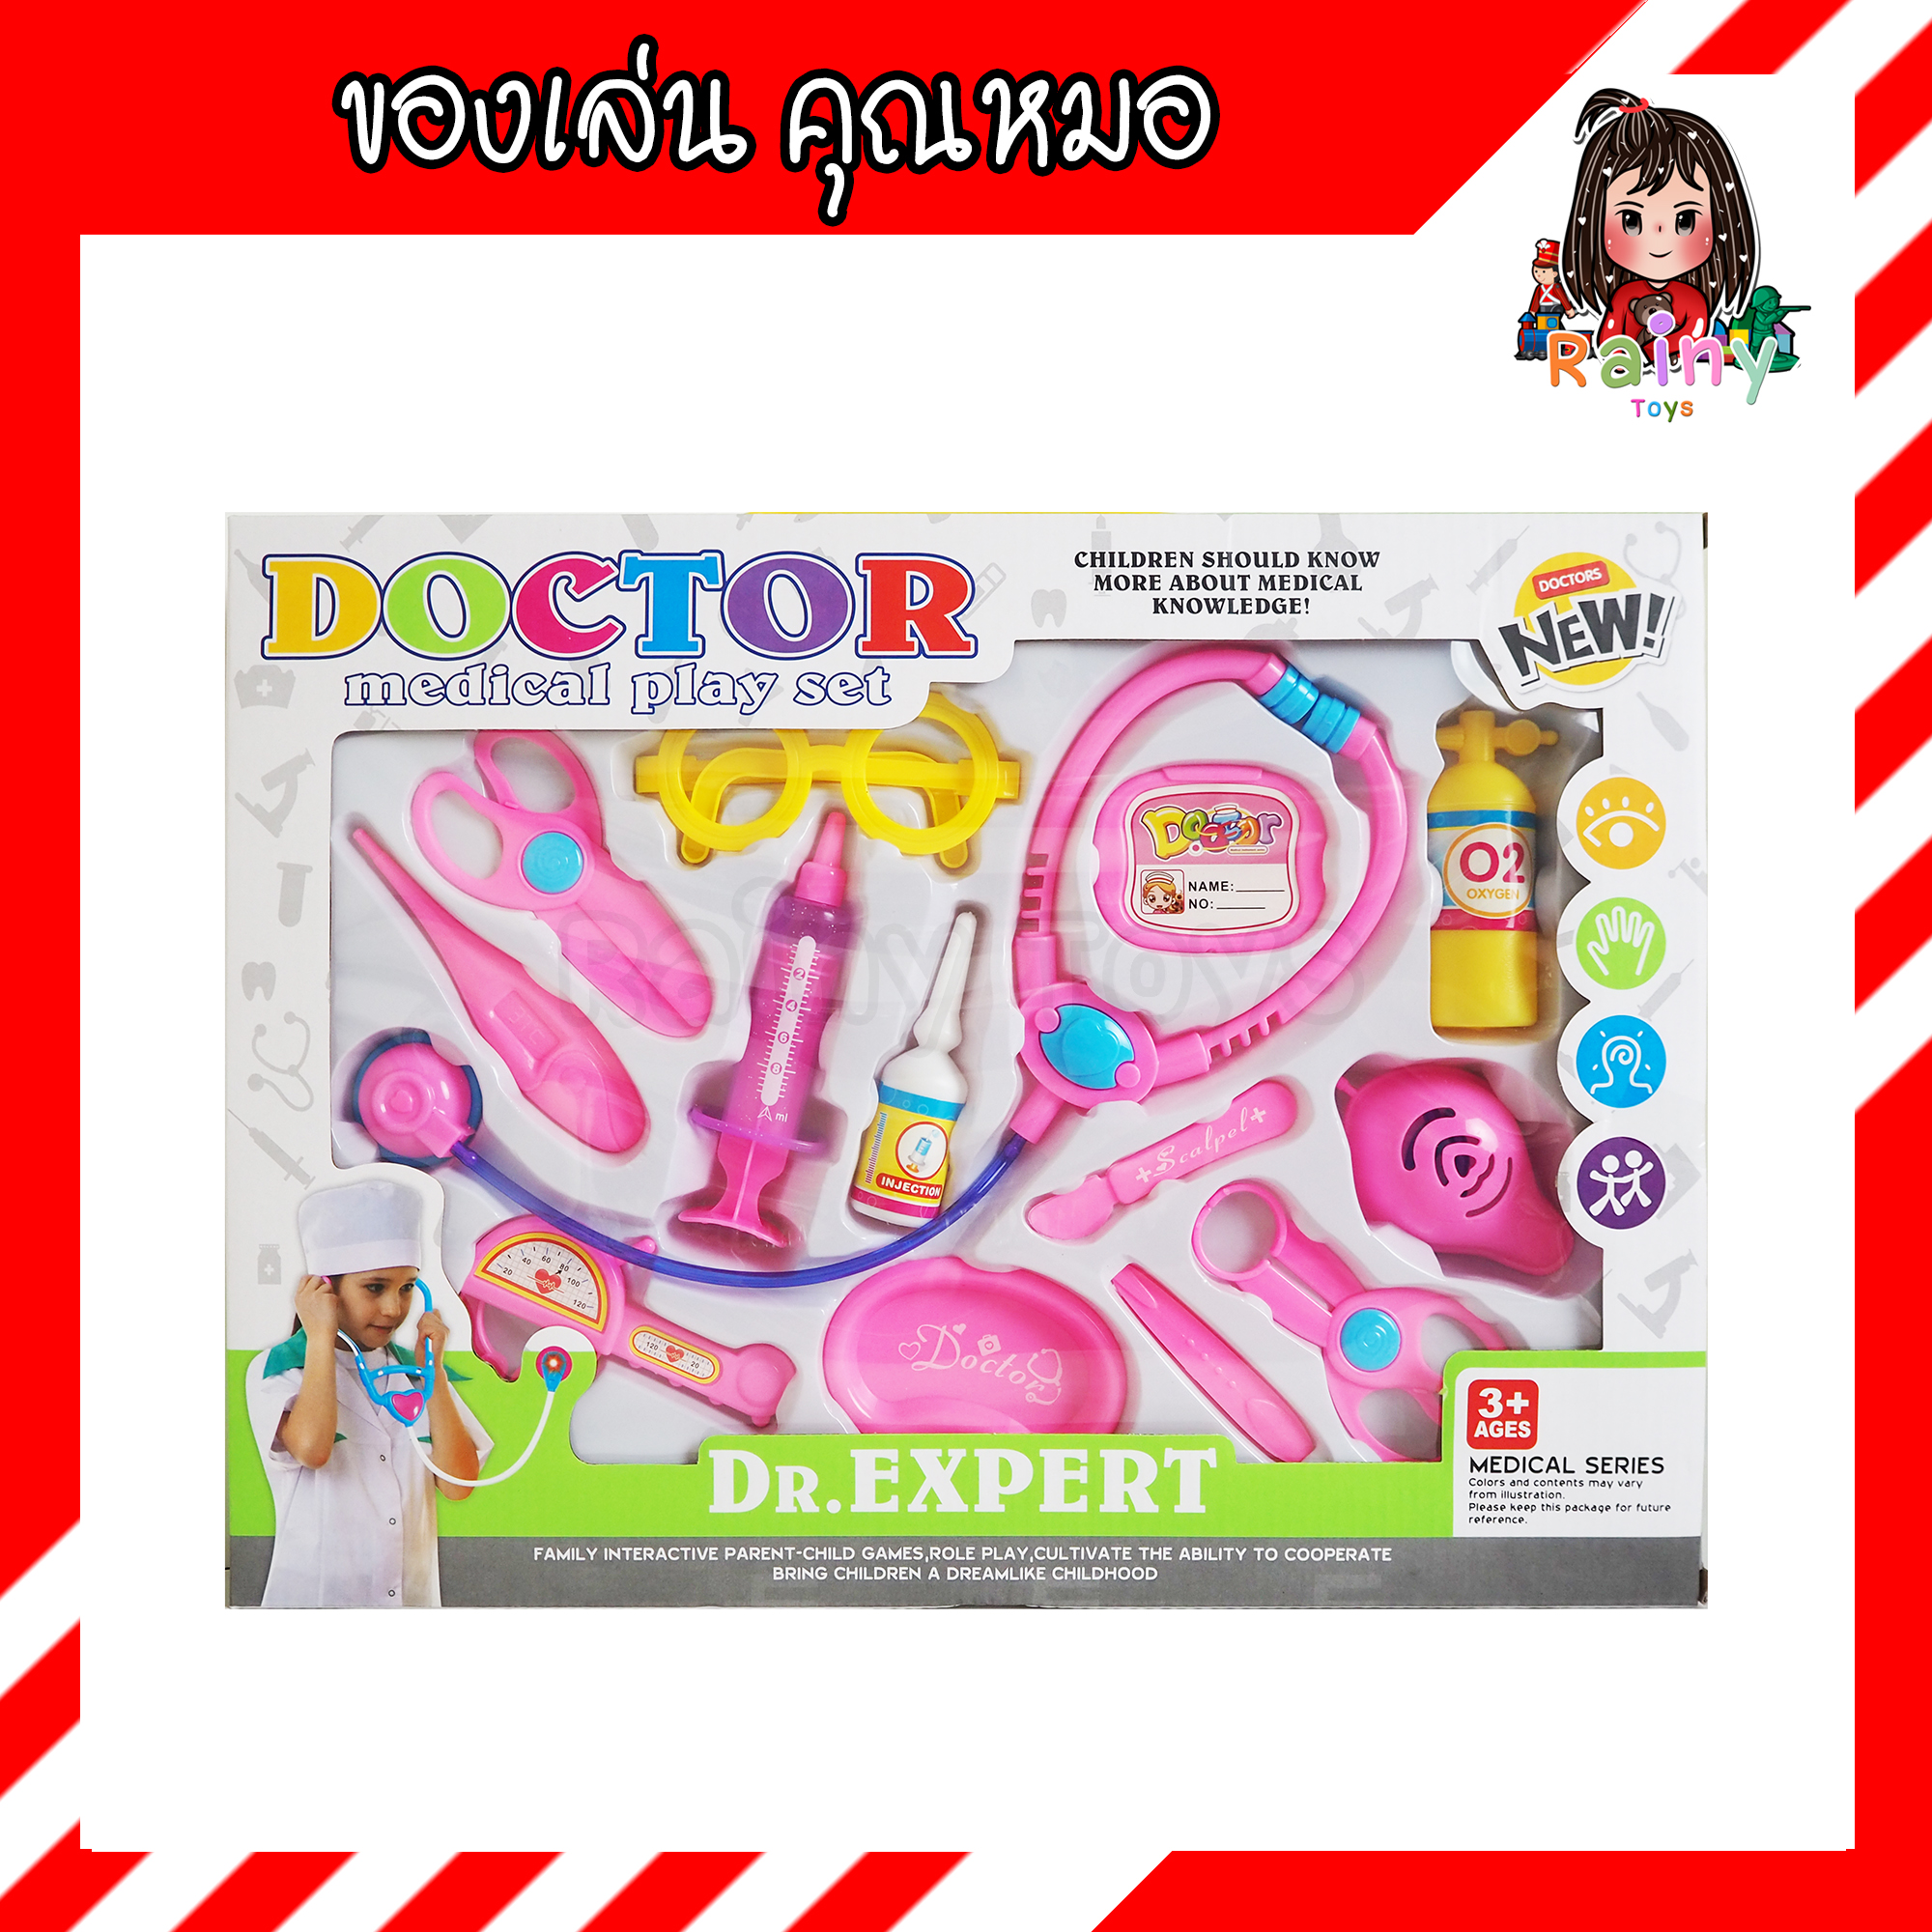 Rainy Toys ของเล่นคุณหมอ พร้อมอุปกรณ์ Doctor Medical Toy มี มอก. ชุดของเล่นคุณหมอ ของเล่นหมอ ของเล่นเครื่องมือหมอ อุปกรณ์หมอของเล่น ของเล่น หมอ